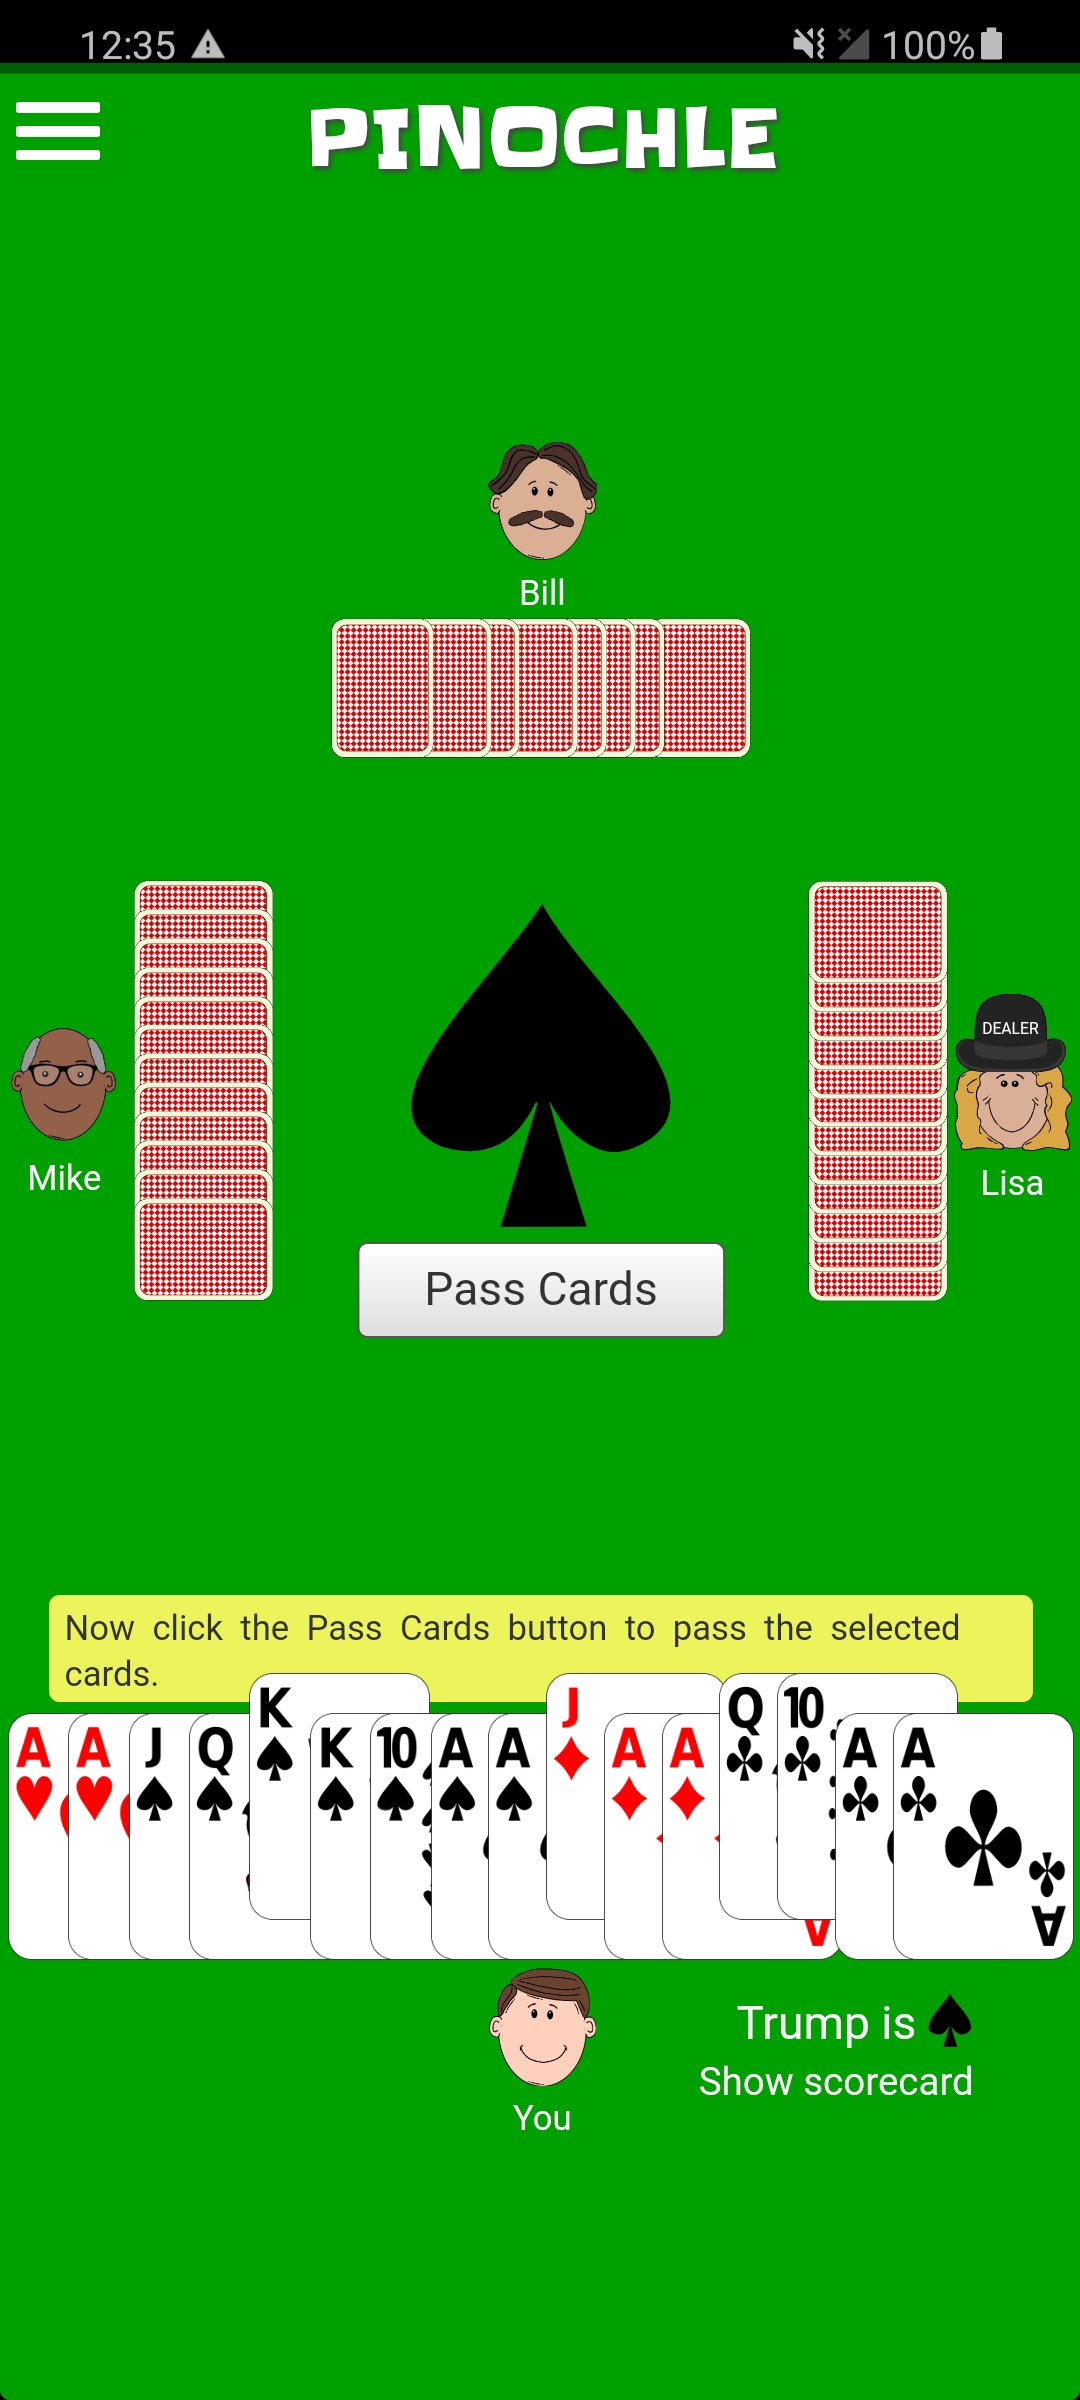 CardGames.io Backgammon 🕹️